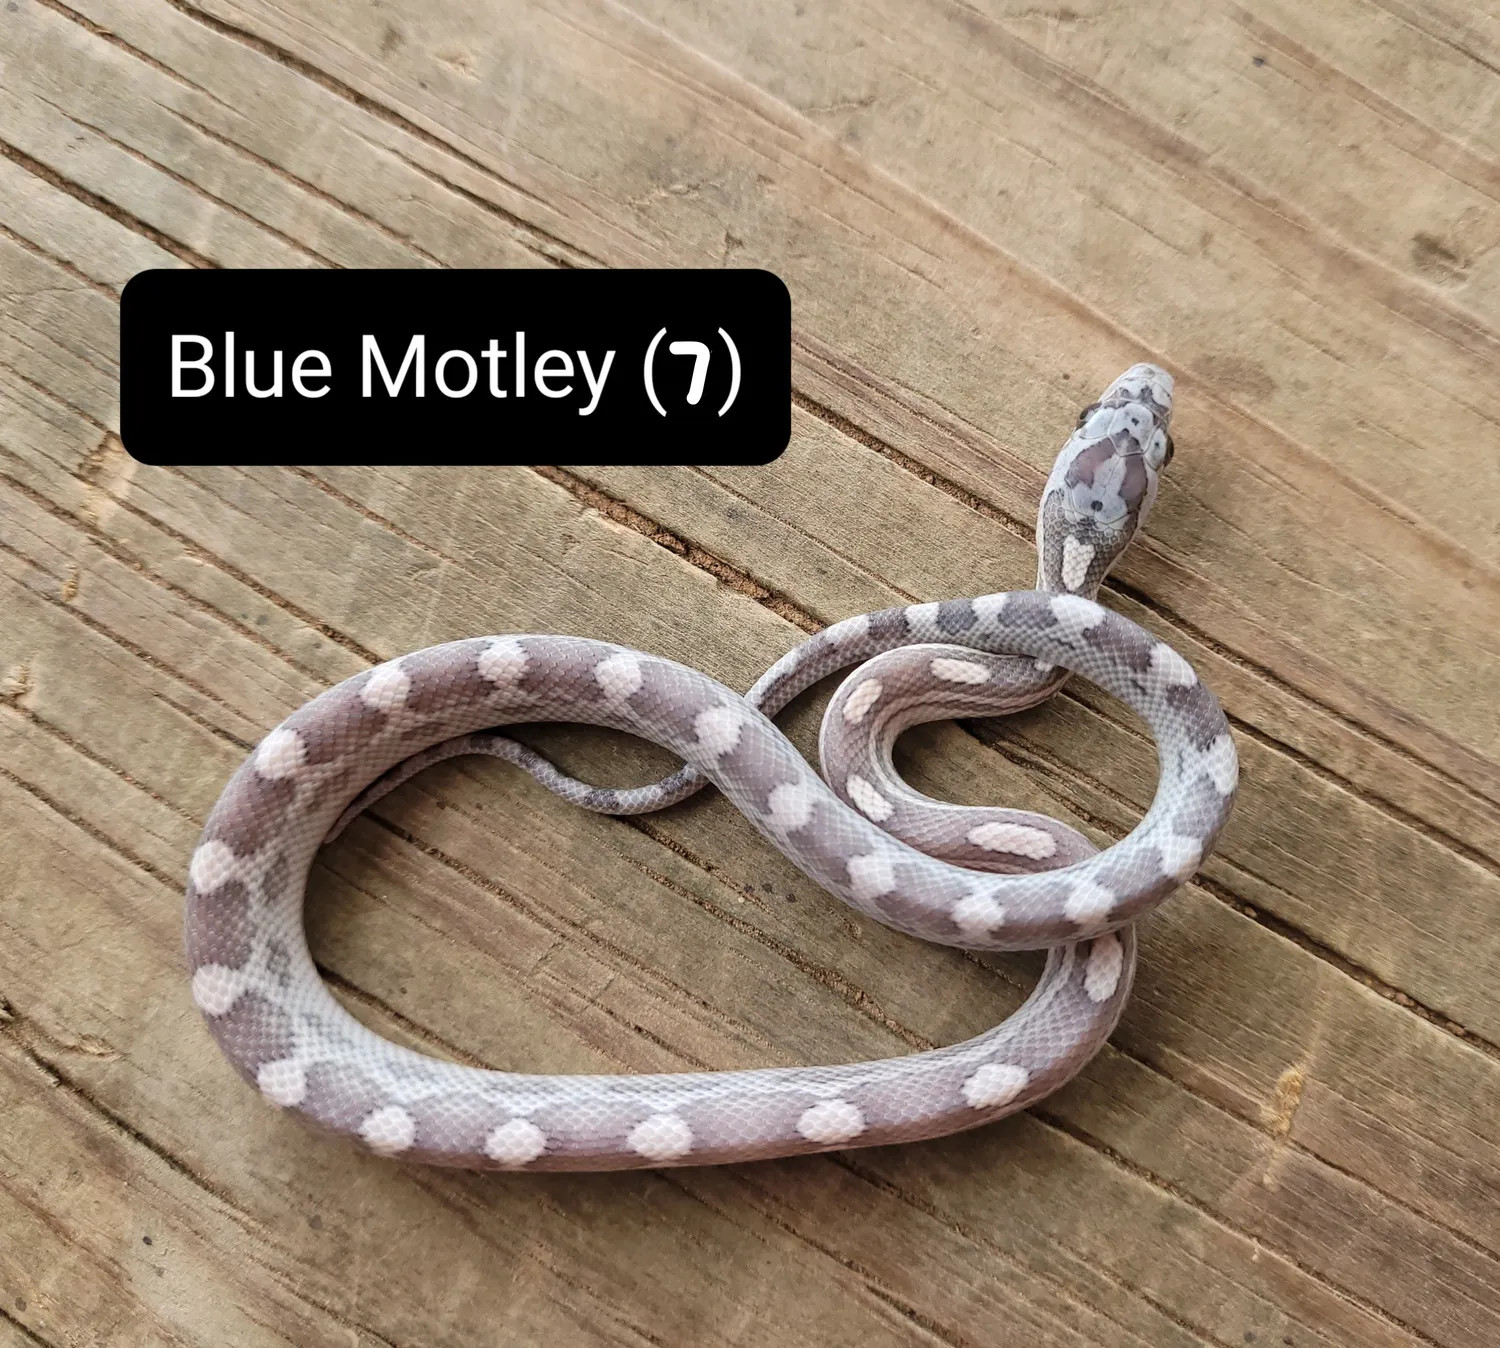 Blue Motley by Cornbred Reptiles